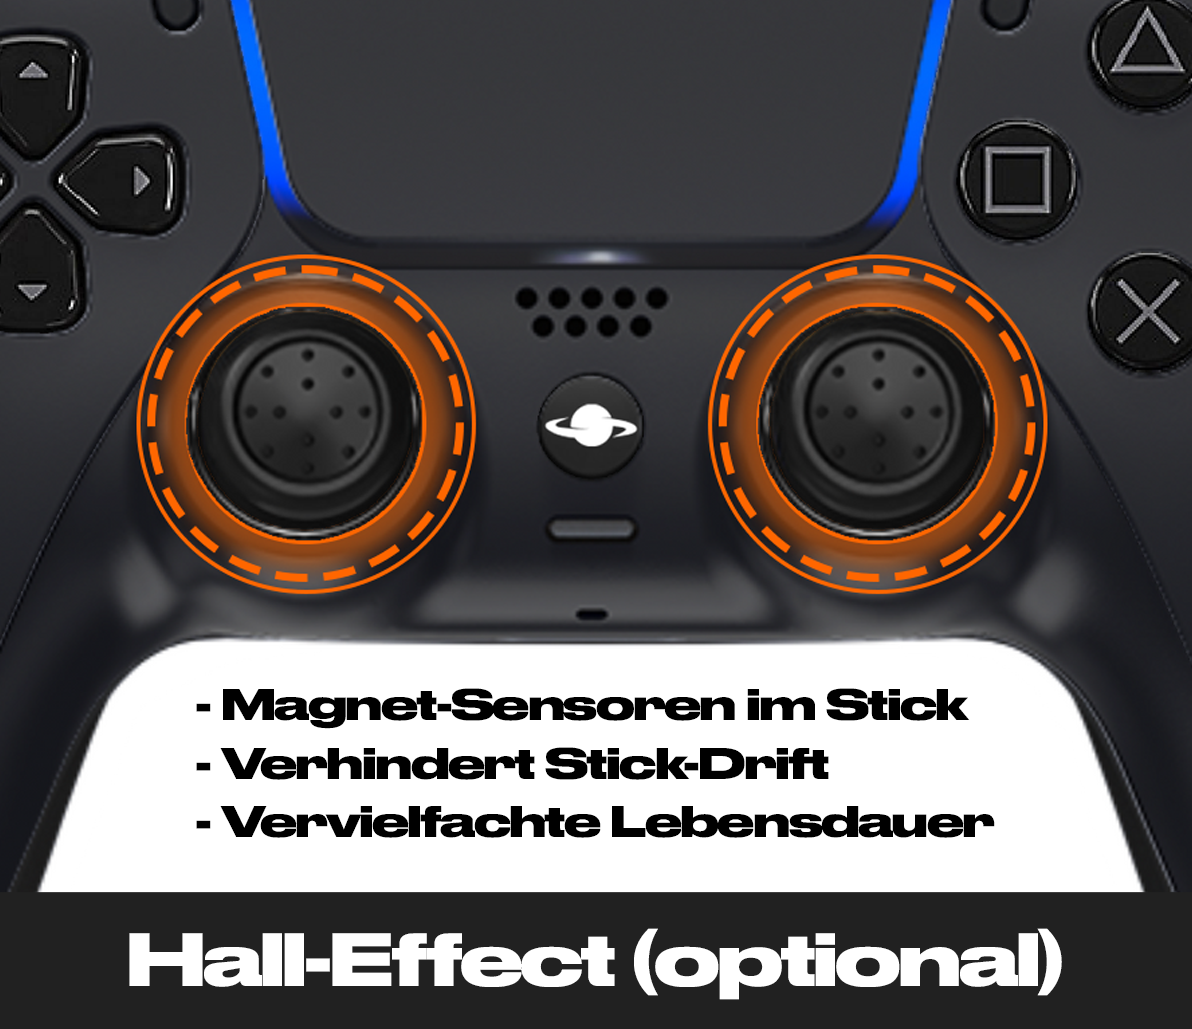 PS5 Custom Controller 'Blaue Flammen'